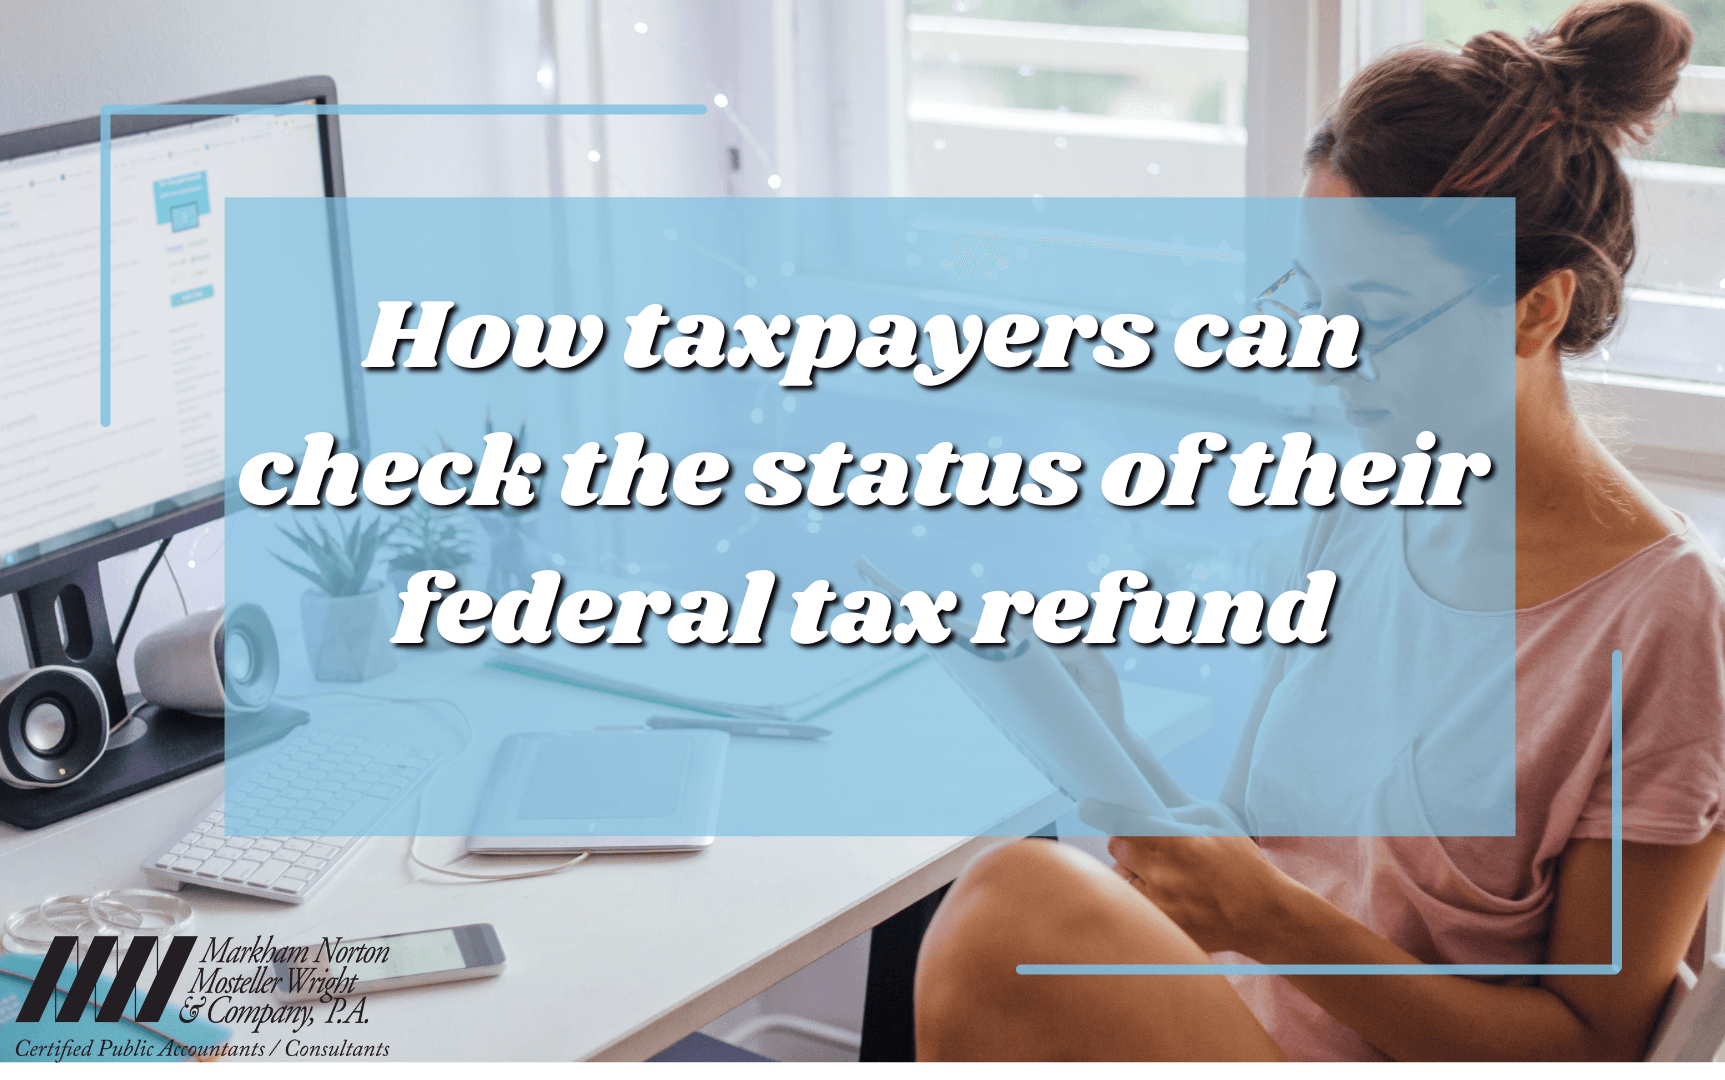 How taspayers can check the status pf their federal tax return